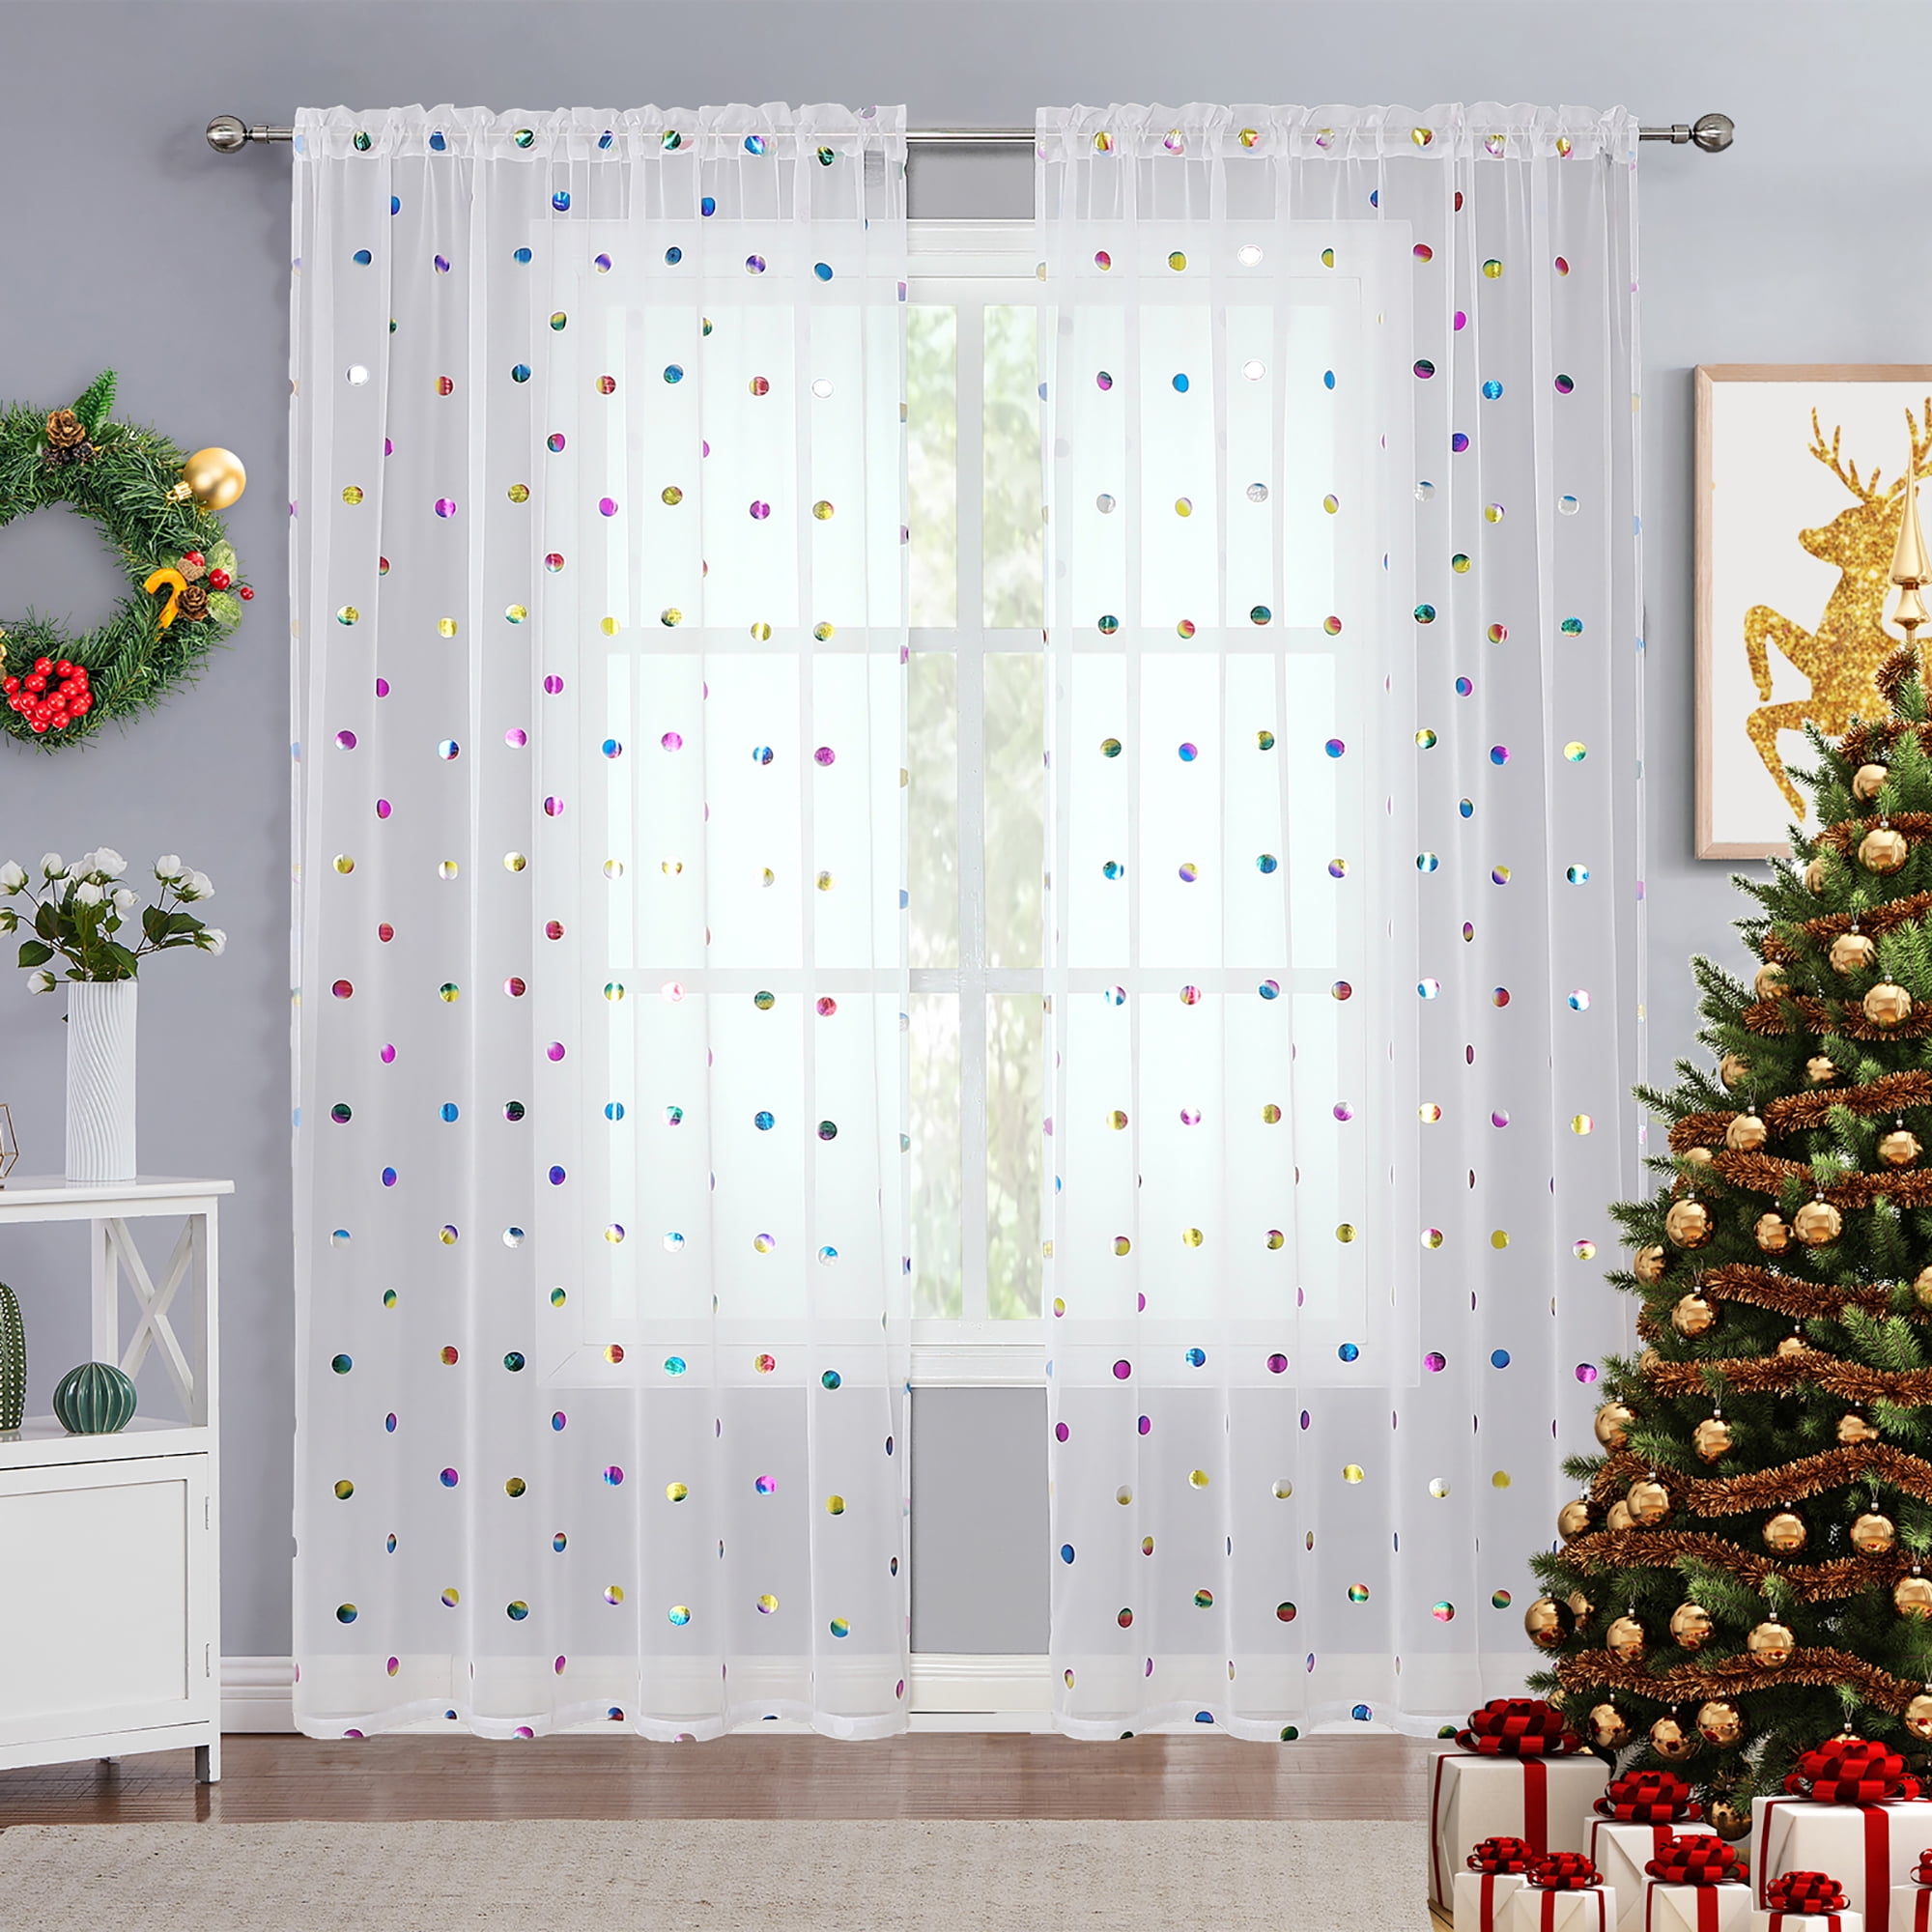 Bazaahm White Sheer Metallic Curtains Living Room Light Filtering 2 Panels 84 L X 52 W Colorful Polka Dots Printed Linen Voile Drapes Kids Juvenile B 151ca2a5 79ff 4809 885c Bd897f4bd1b5.63627a818effa6ed0312bb9dcd346a19 